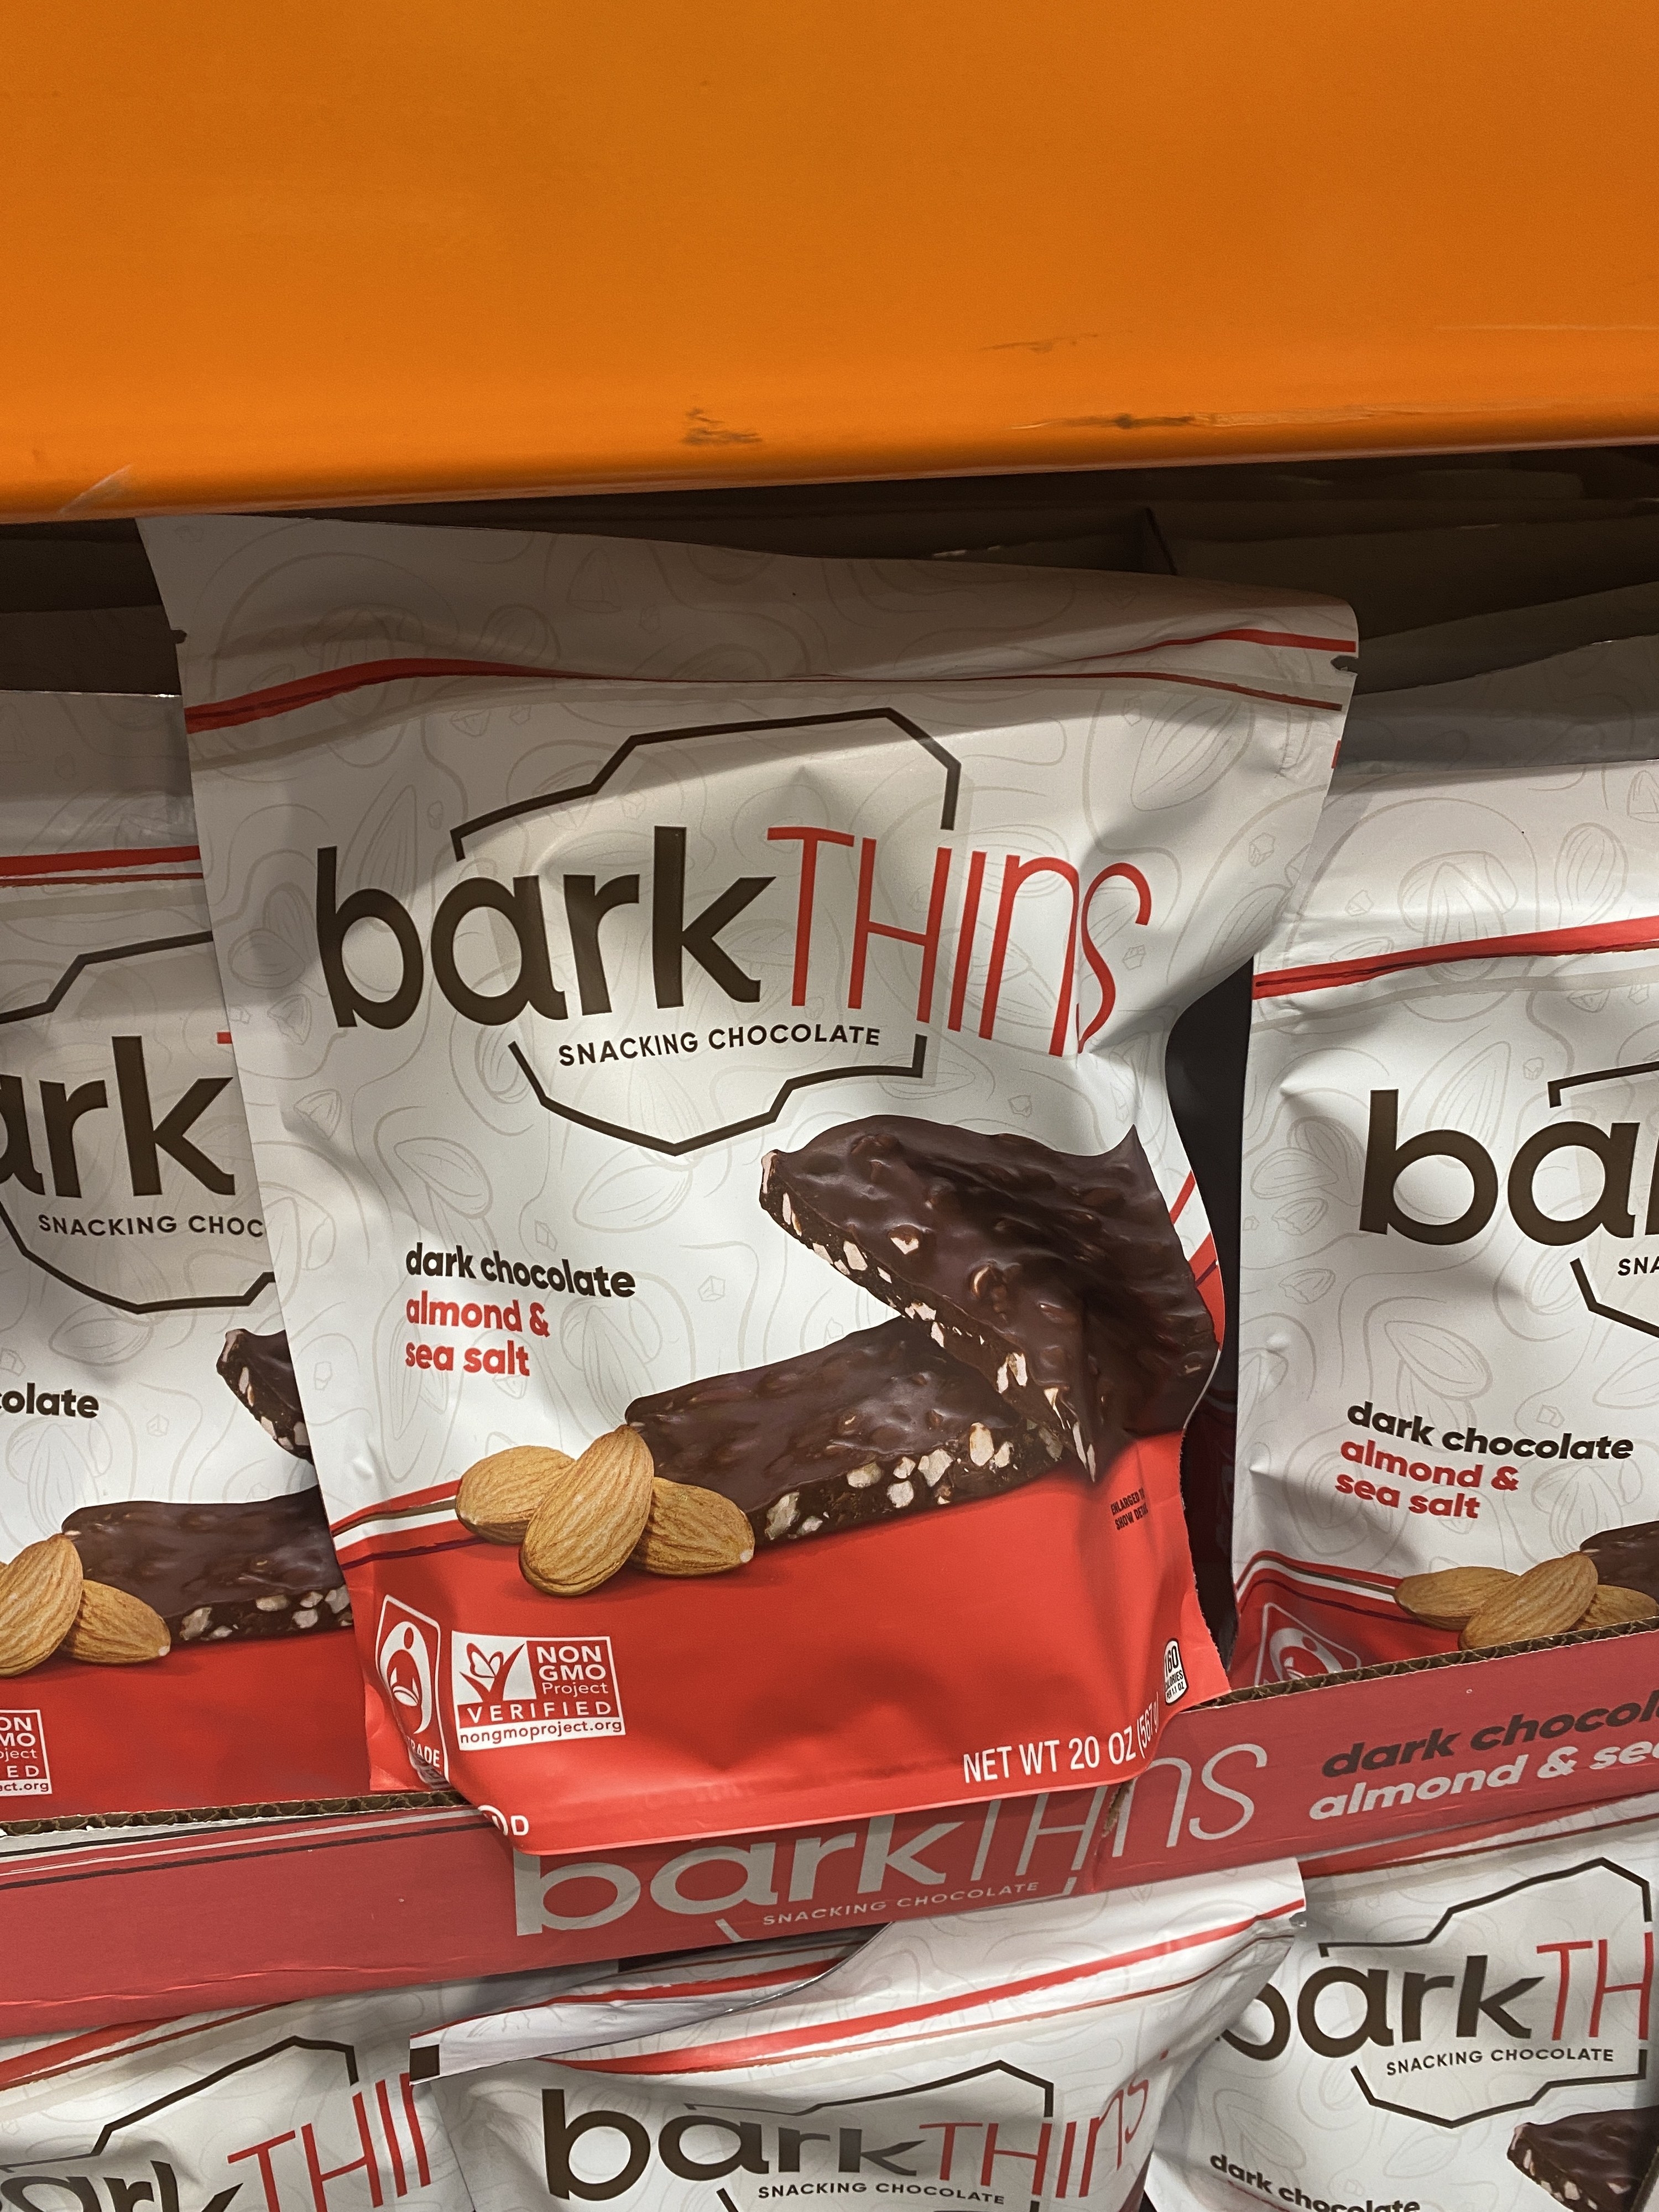 bag of barkthins chocolate